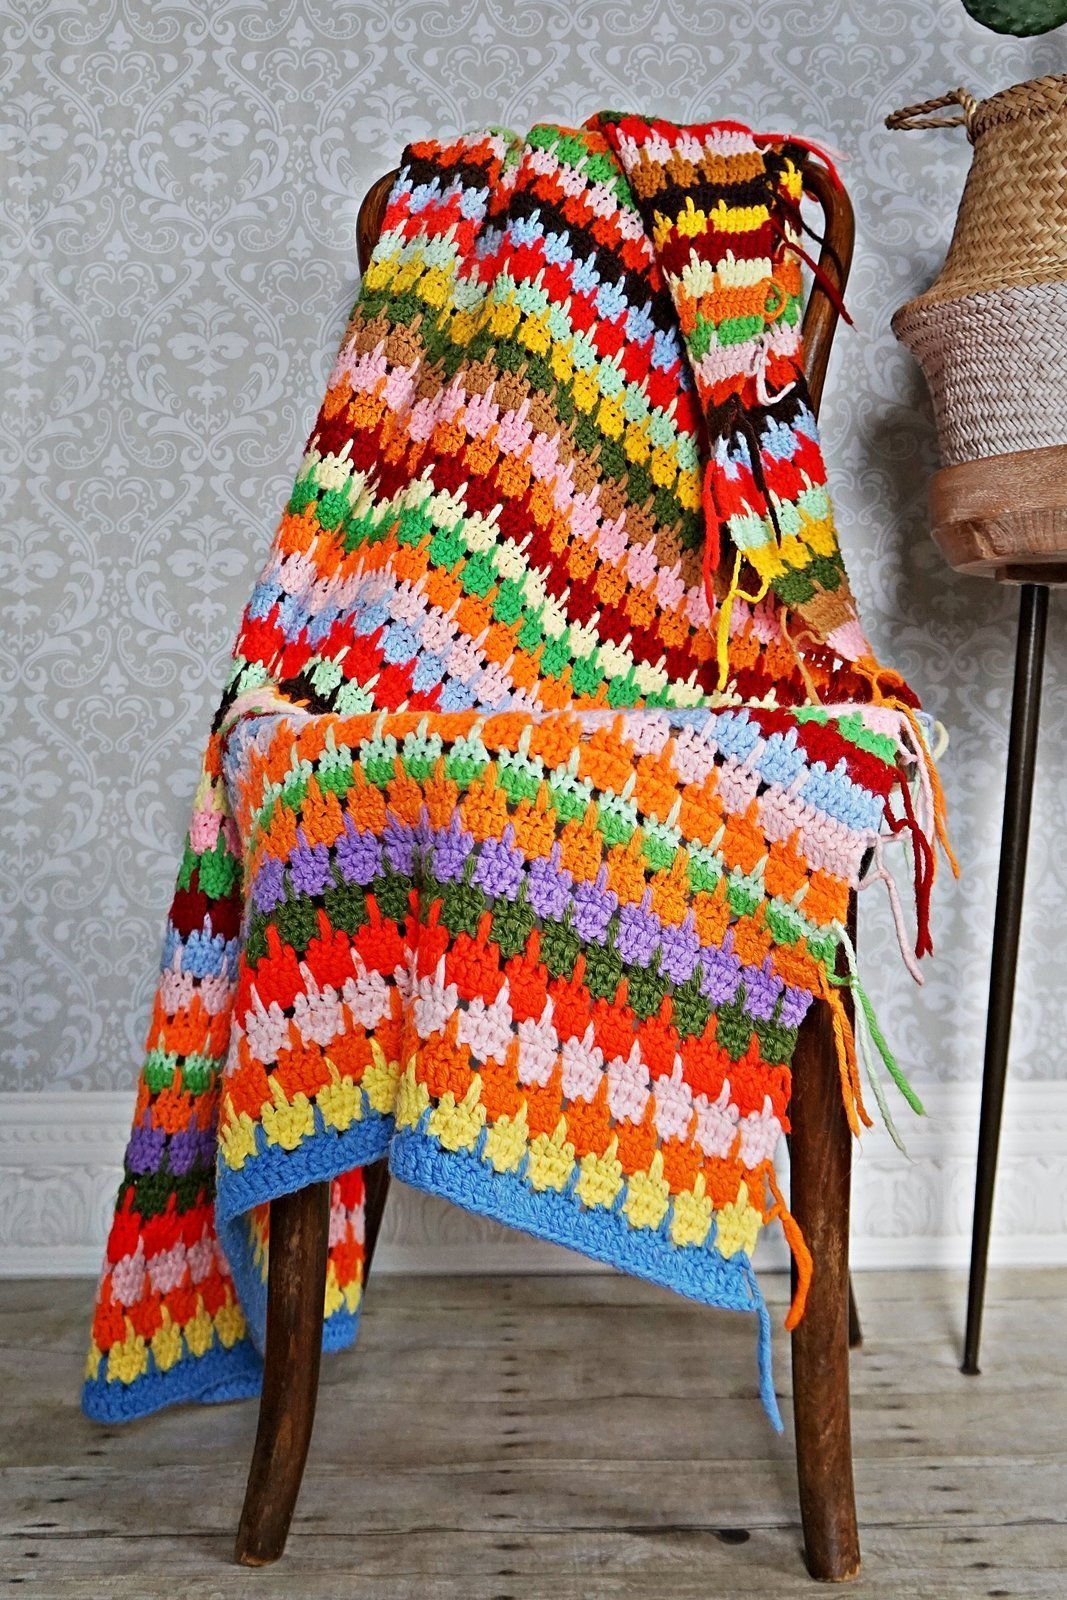 Vintage Rainbow Crochet Afghan-closiTherapi | vinTage